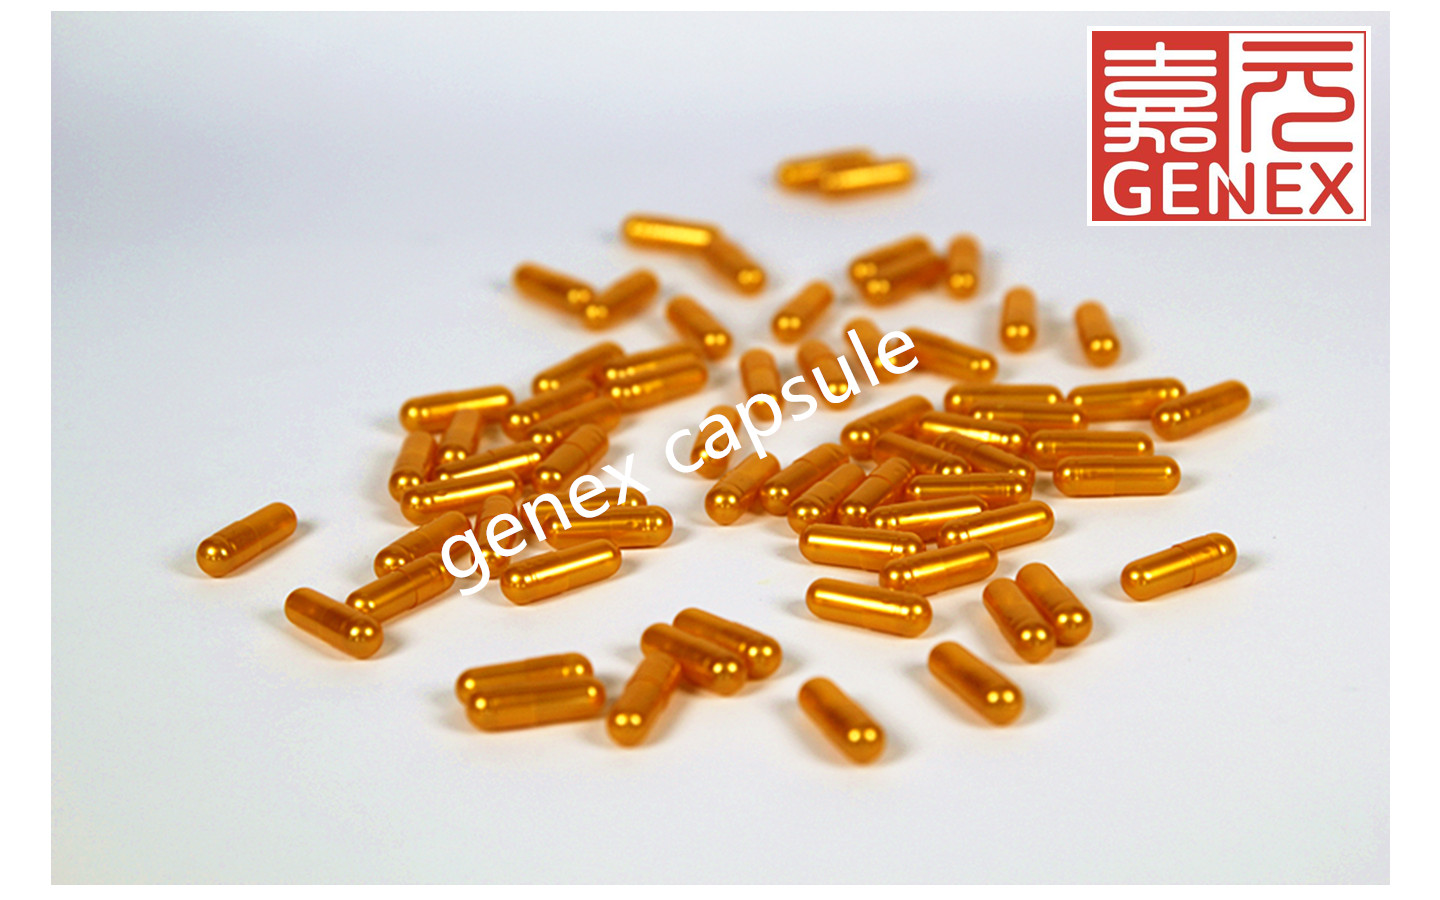 gelatin capsule in gold color.jpg